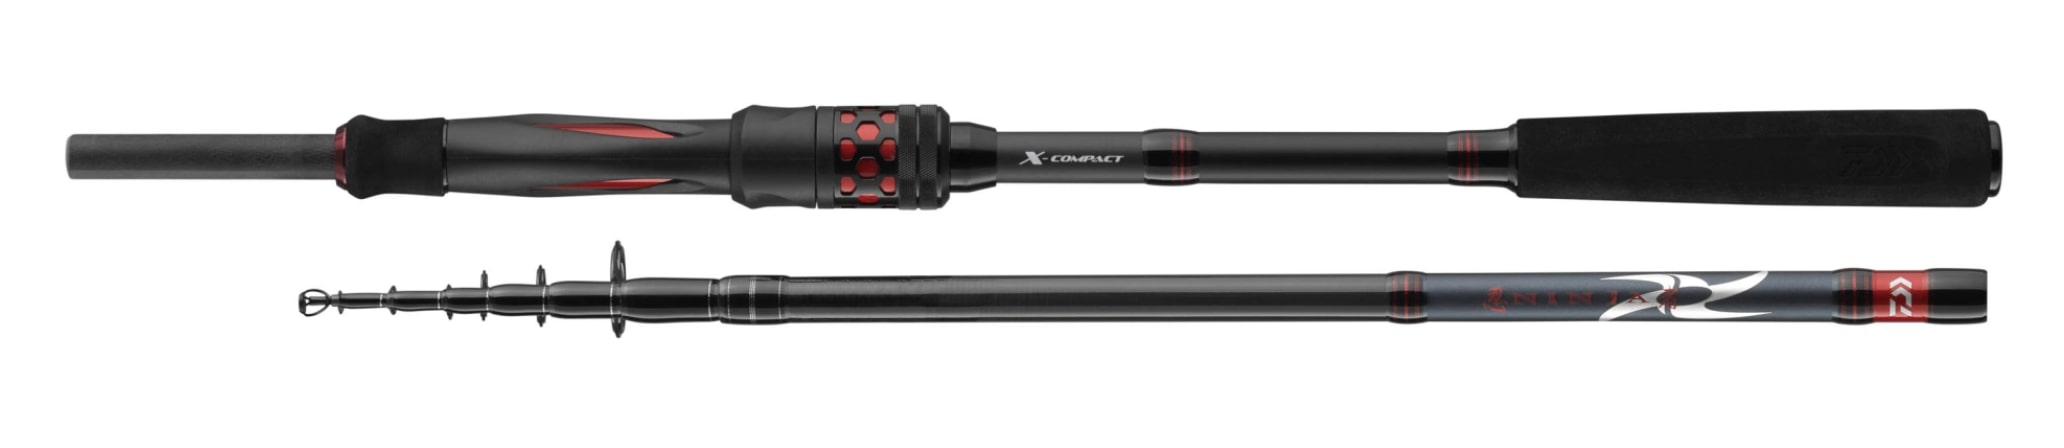 Daiwa Ninja X-Compact Spin Telescopic Travel Rod